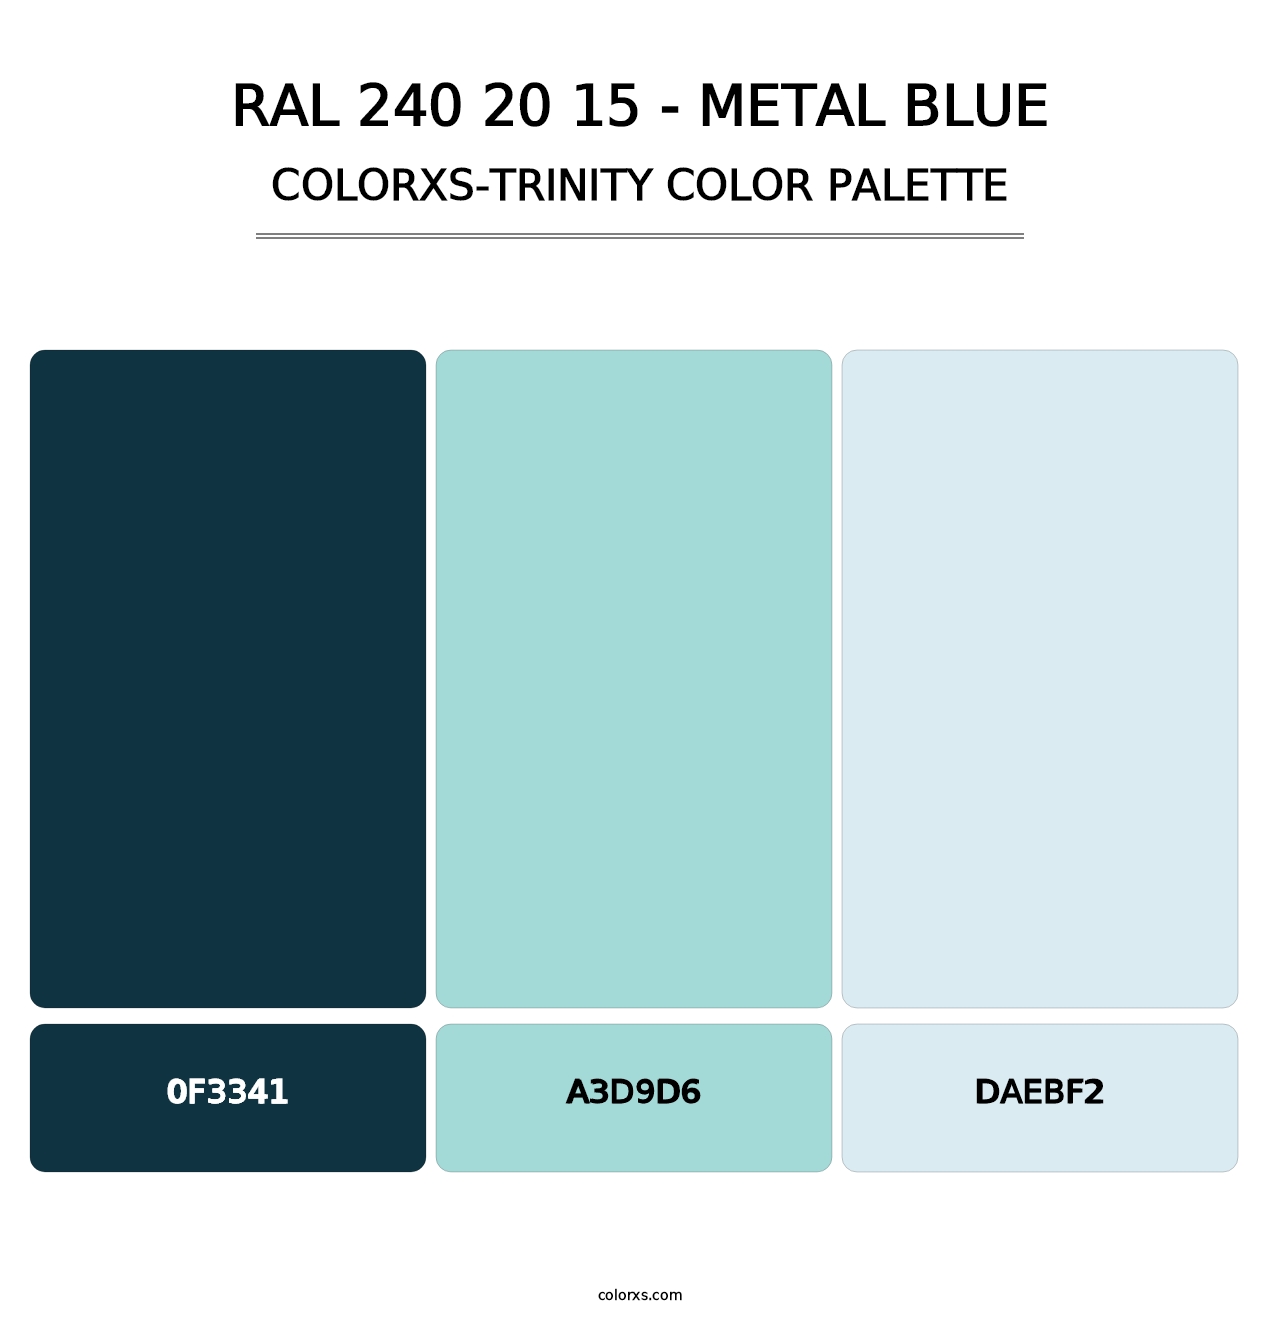 RAL 240 20 15 - Metal Blue - Colorxs Trinity Palette